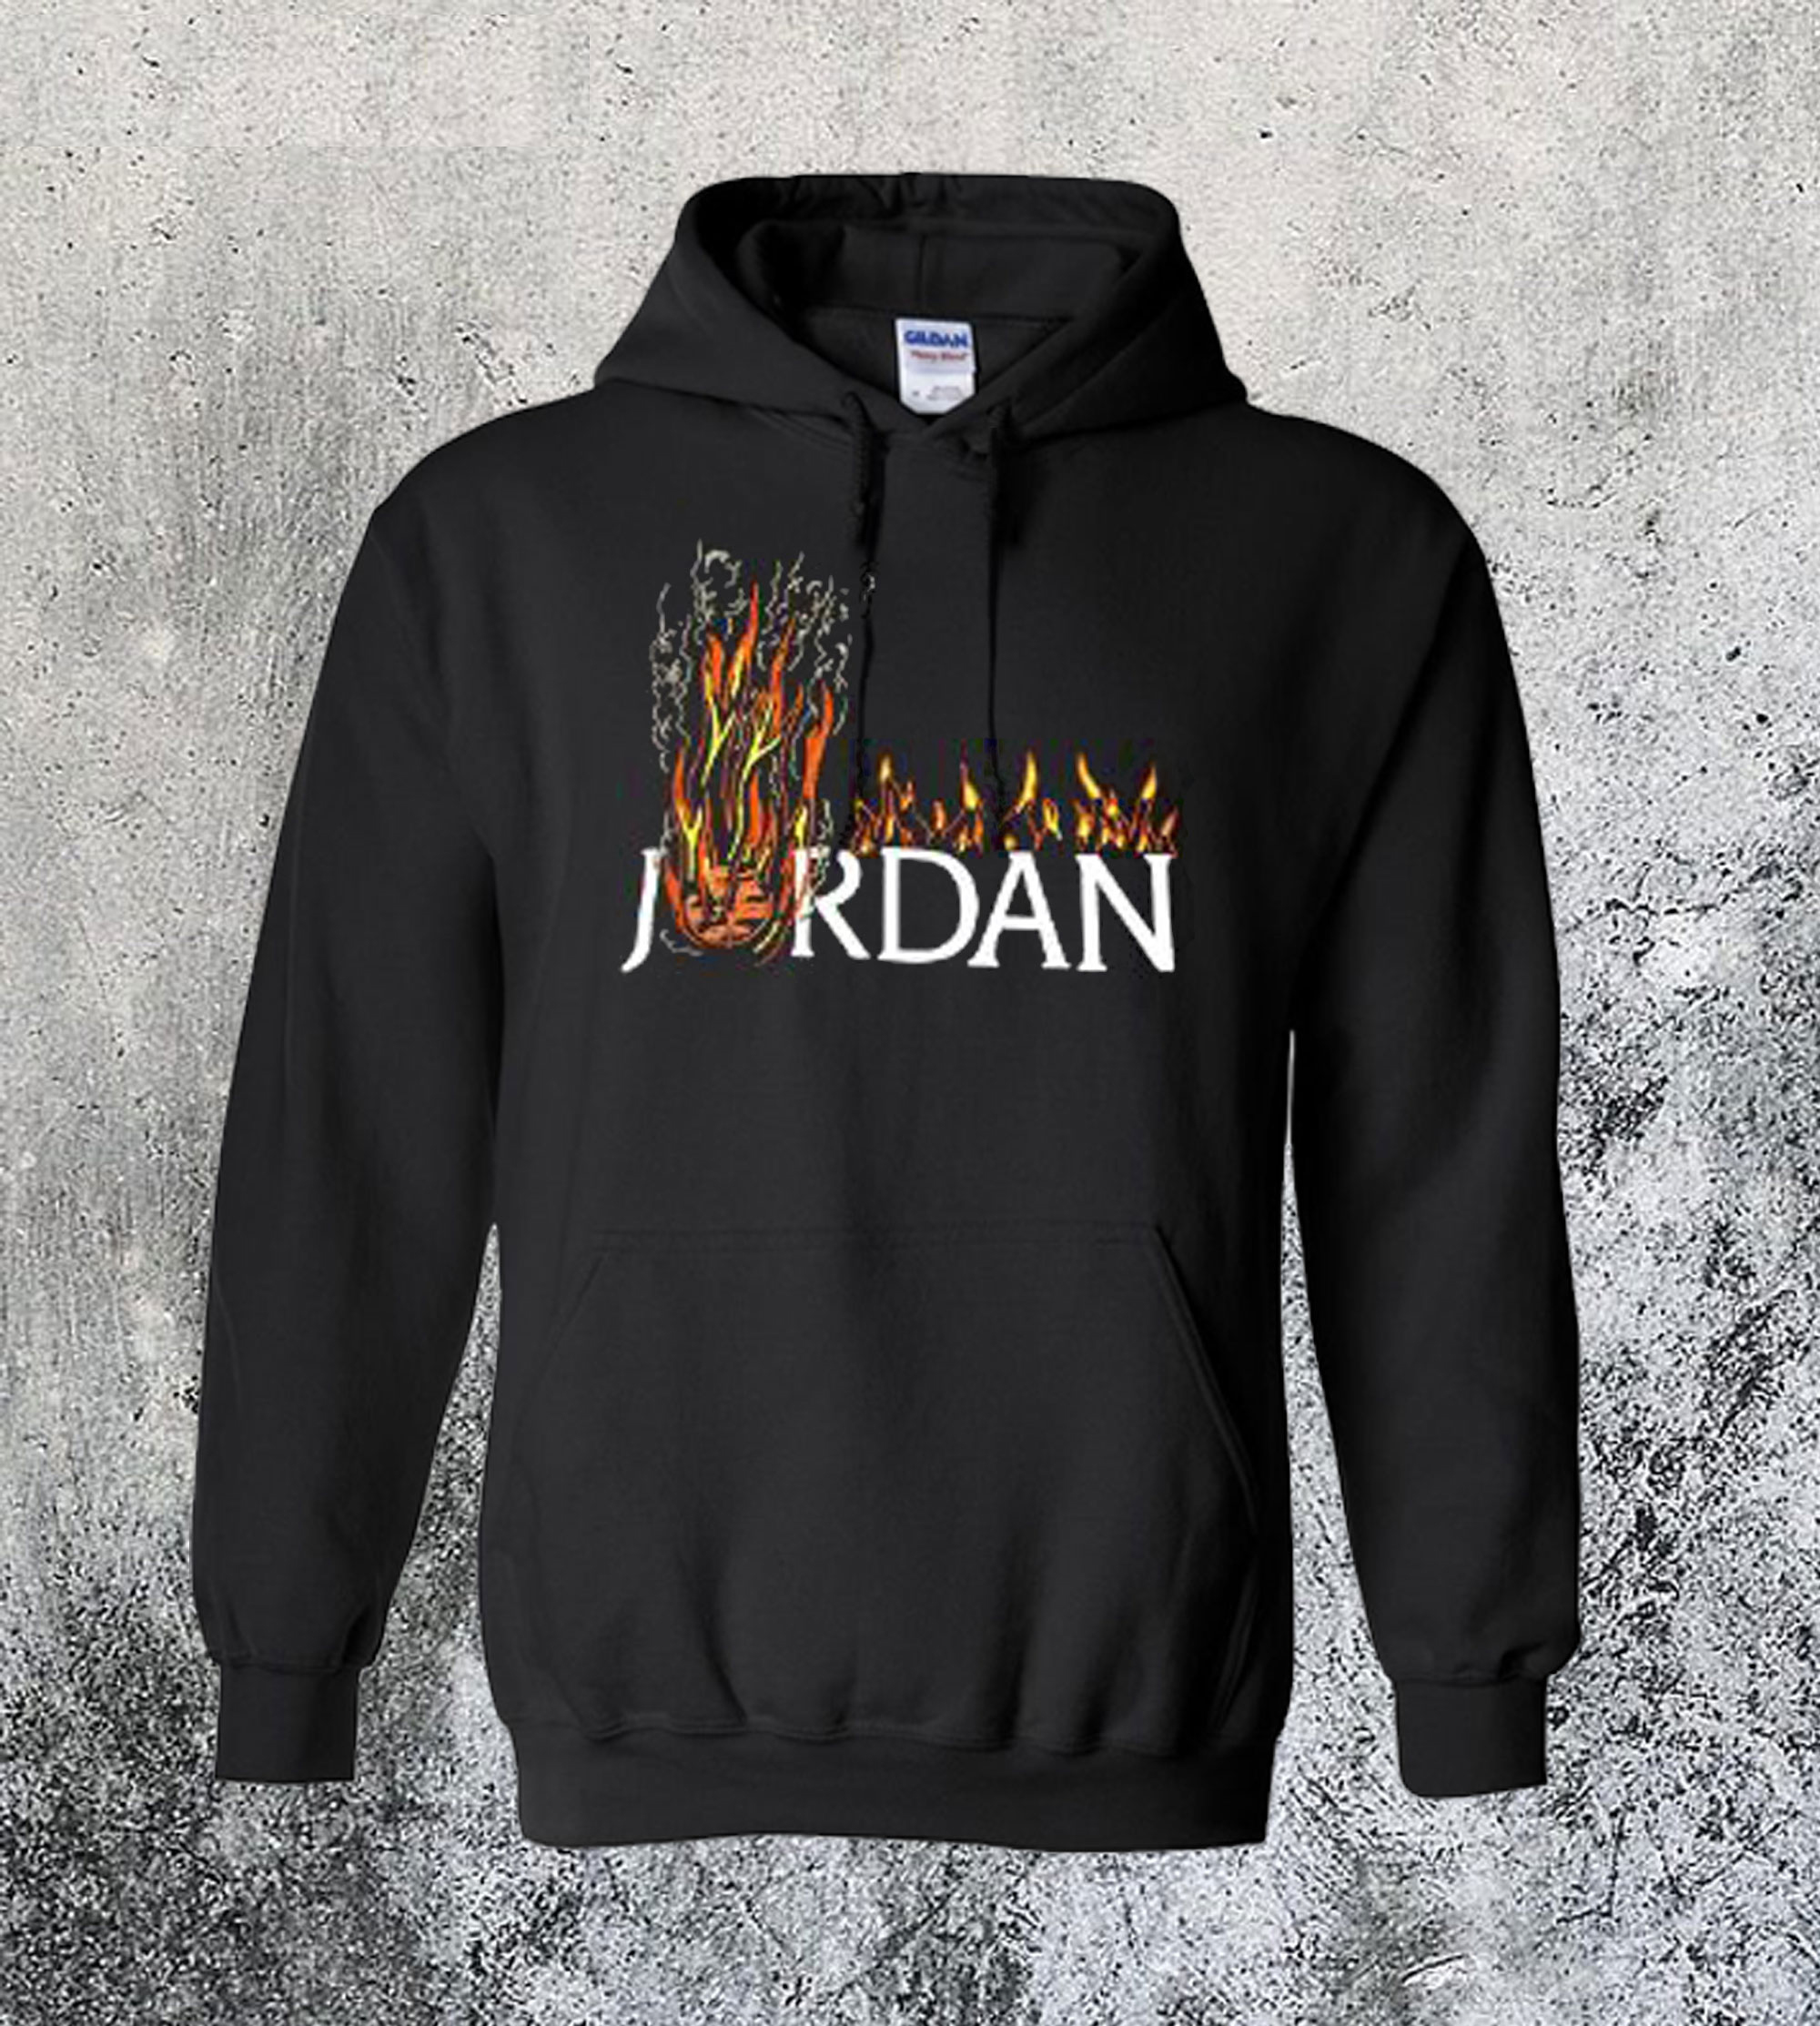 fearless 1s jordan hoodies white no 350s